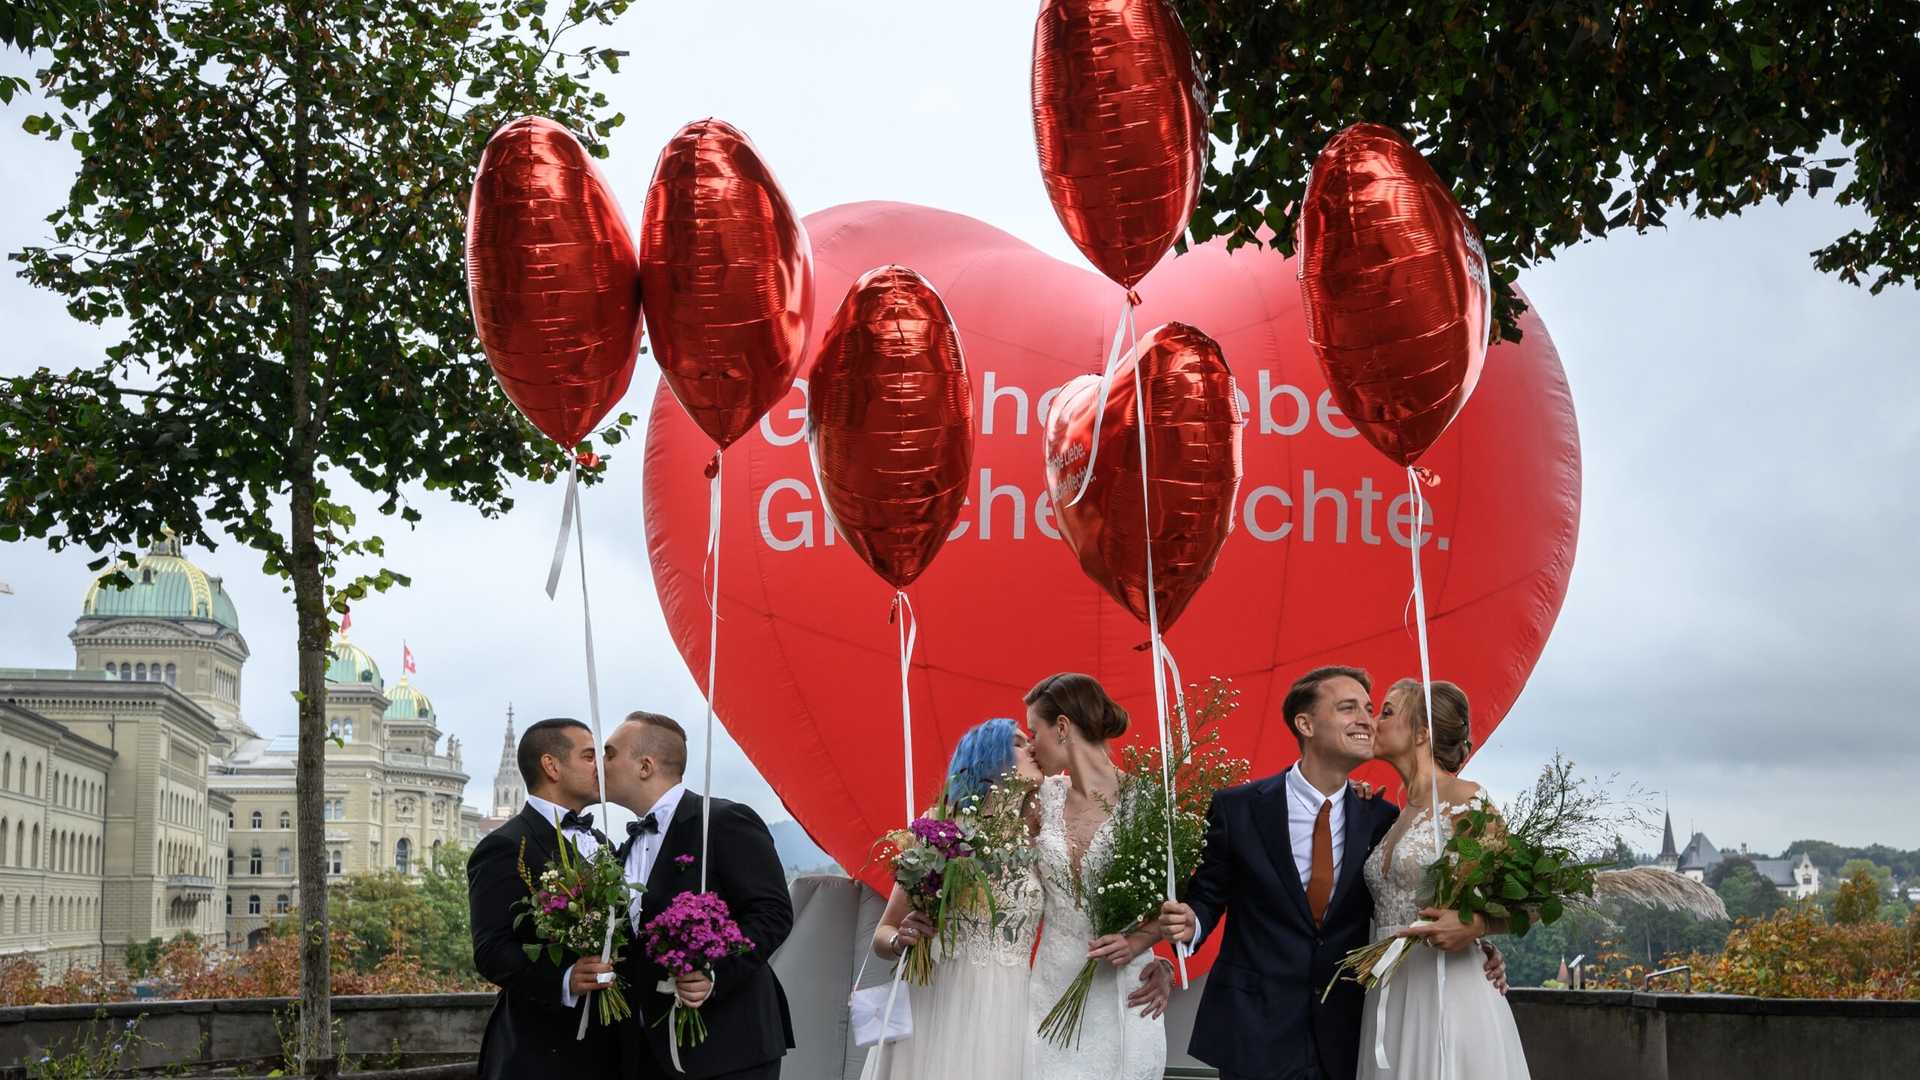 SWITZERLAND - MARRIAGE - REFERENDUM - HOMOSEXUALITY - VOTING - POLITICS - SOCIAL